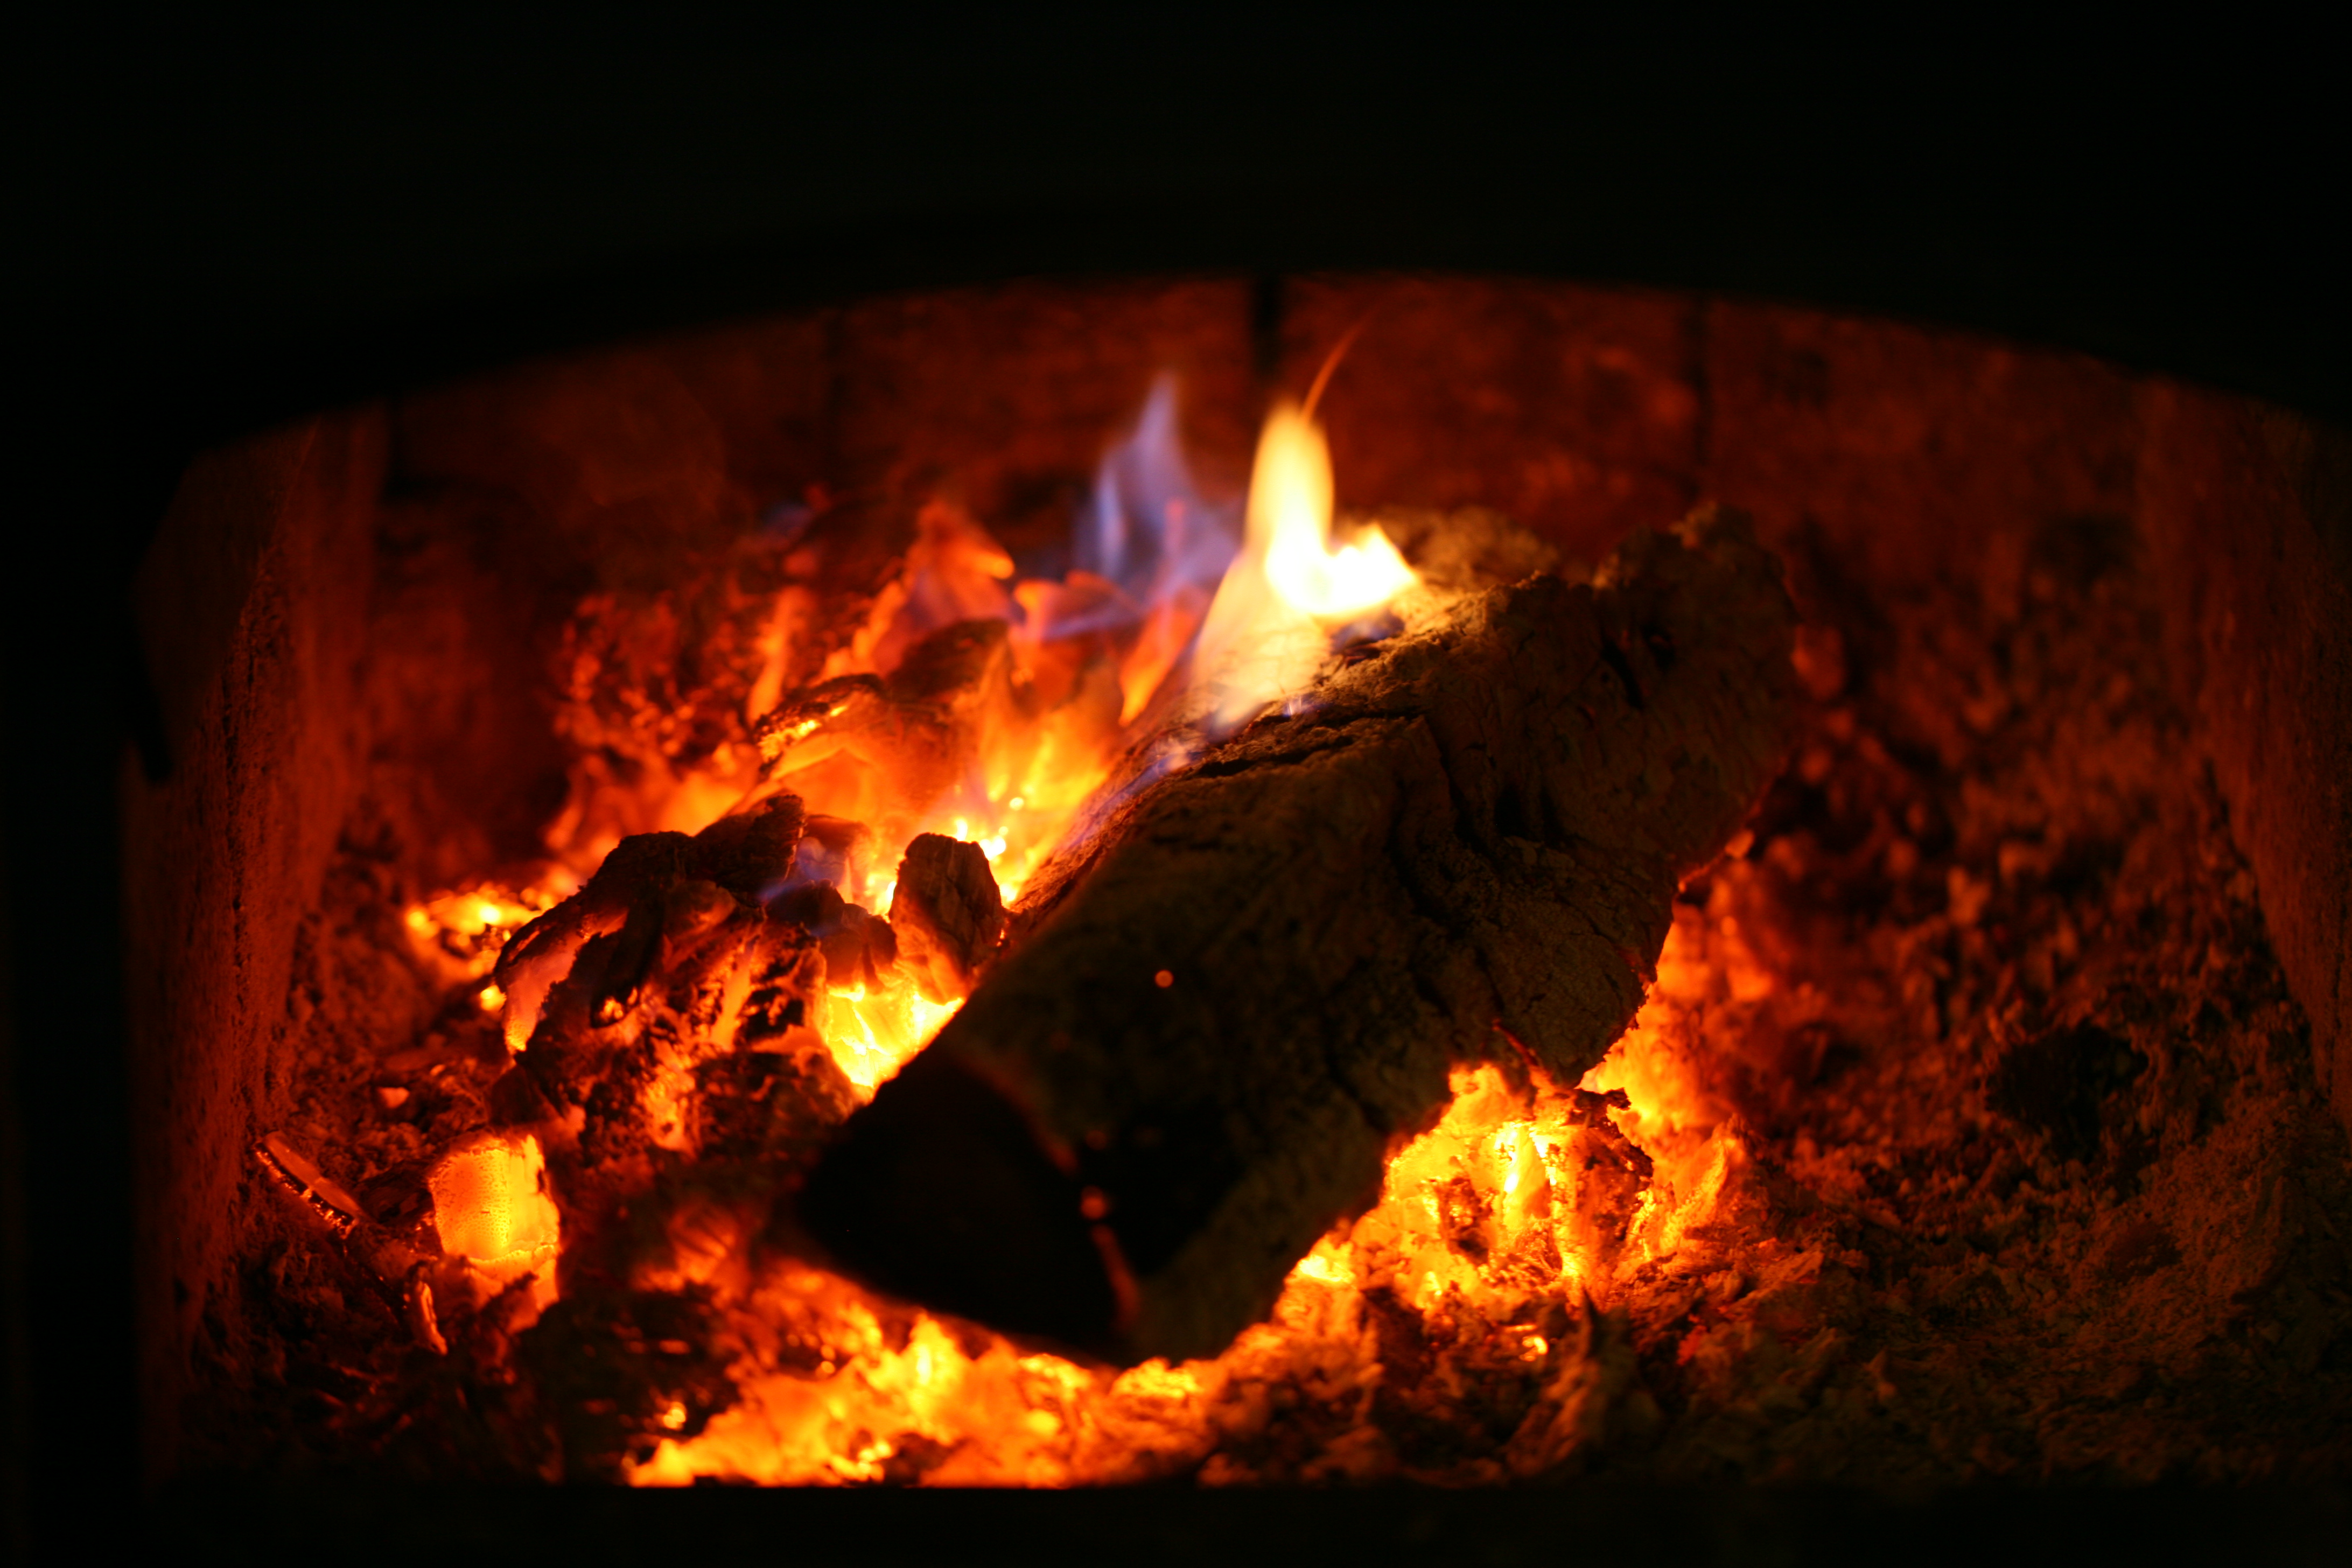 Fireplace embers